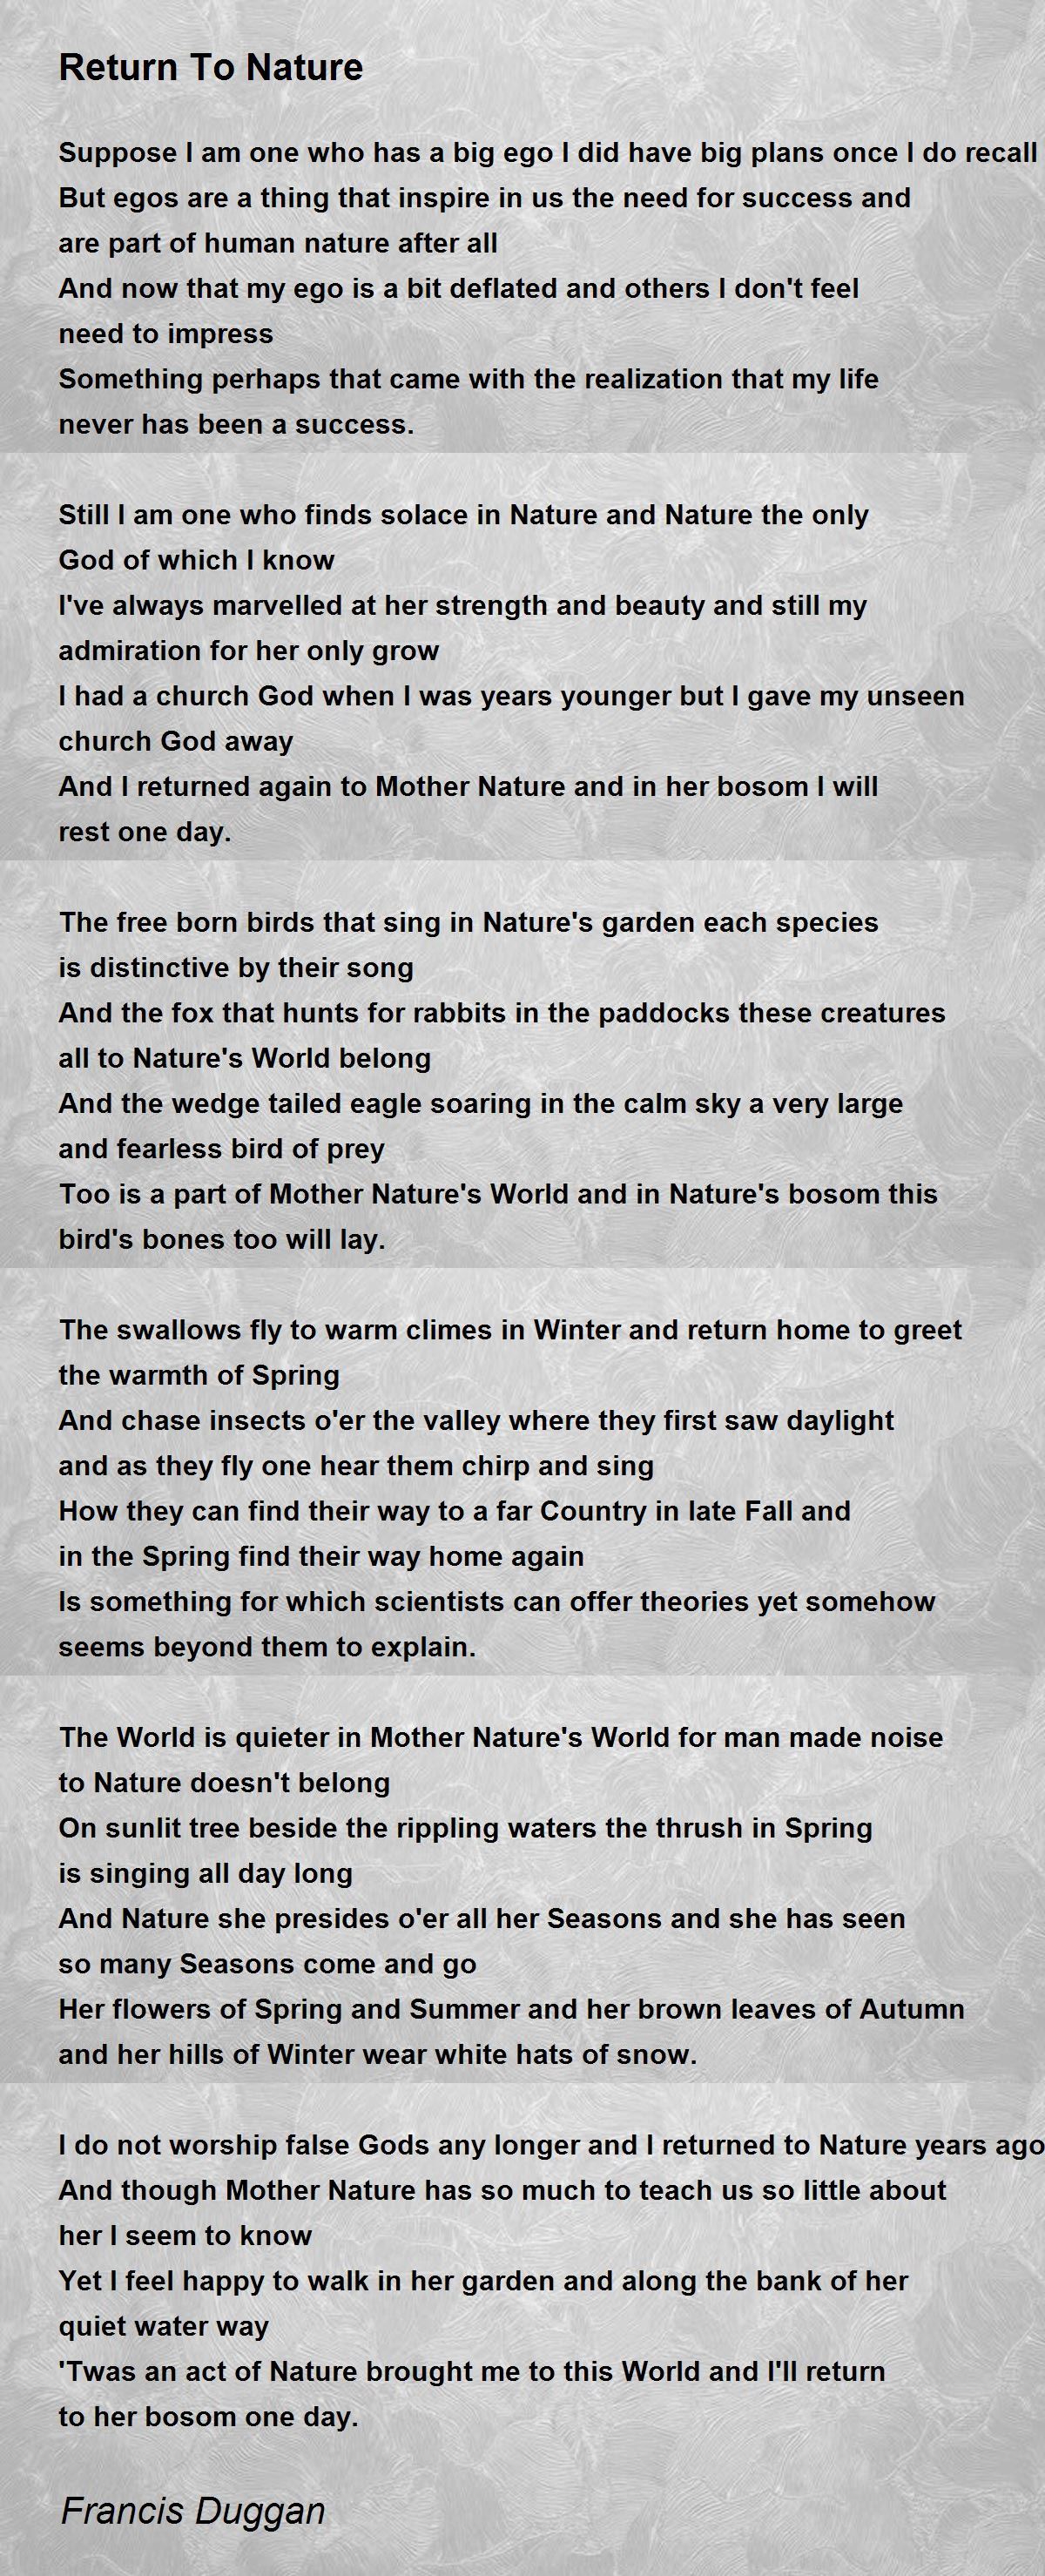 Return To Nature Poem by Francis Duggan - Poem Hunter